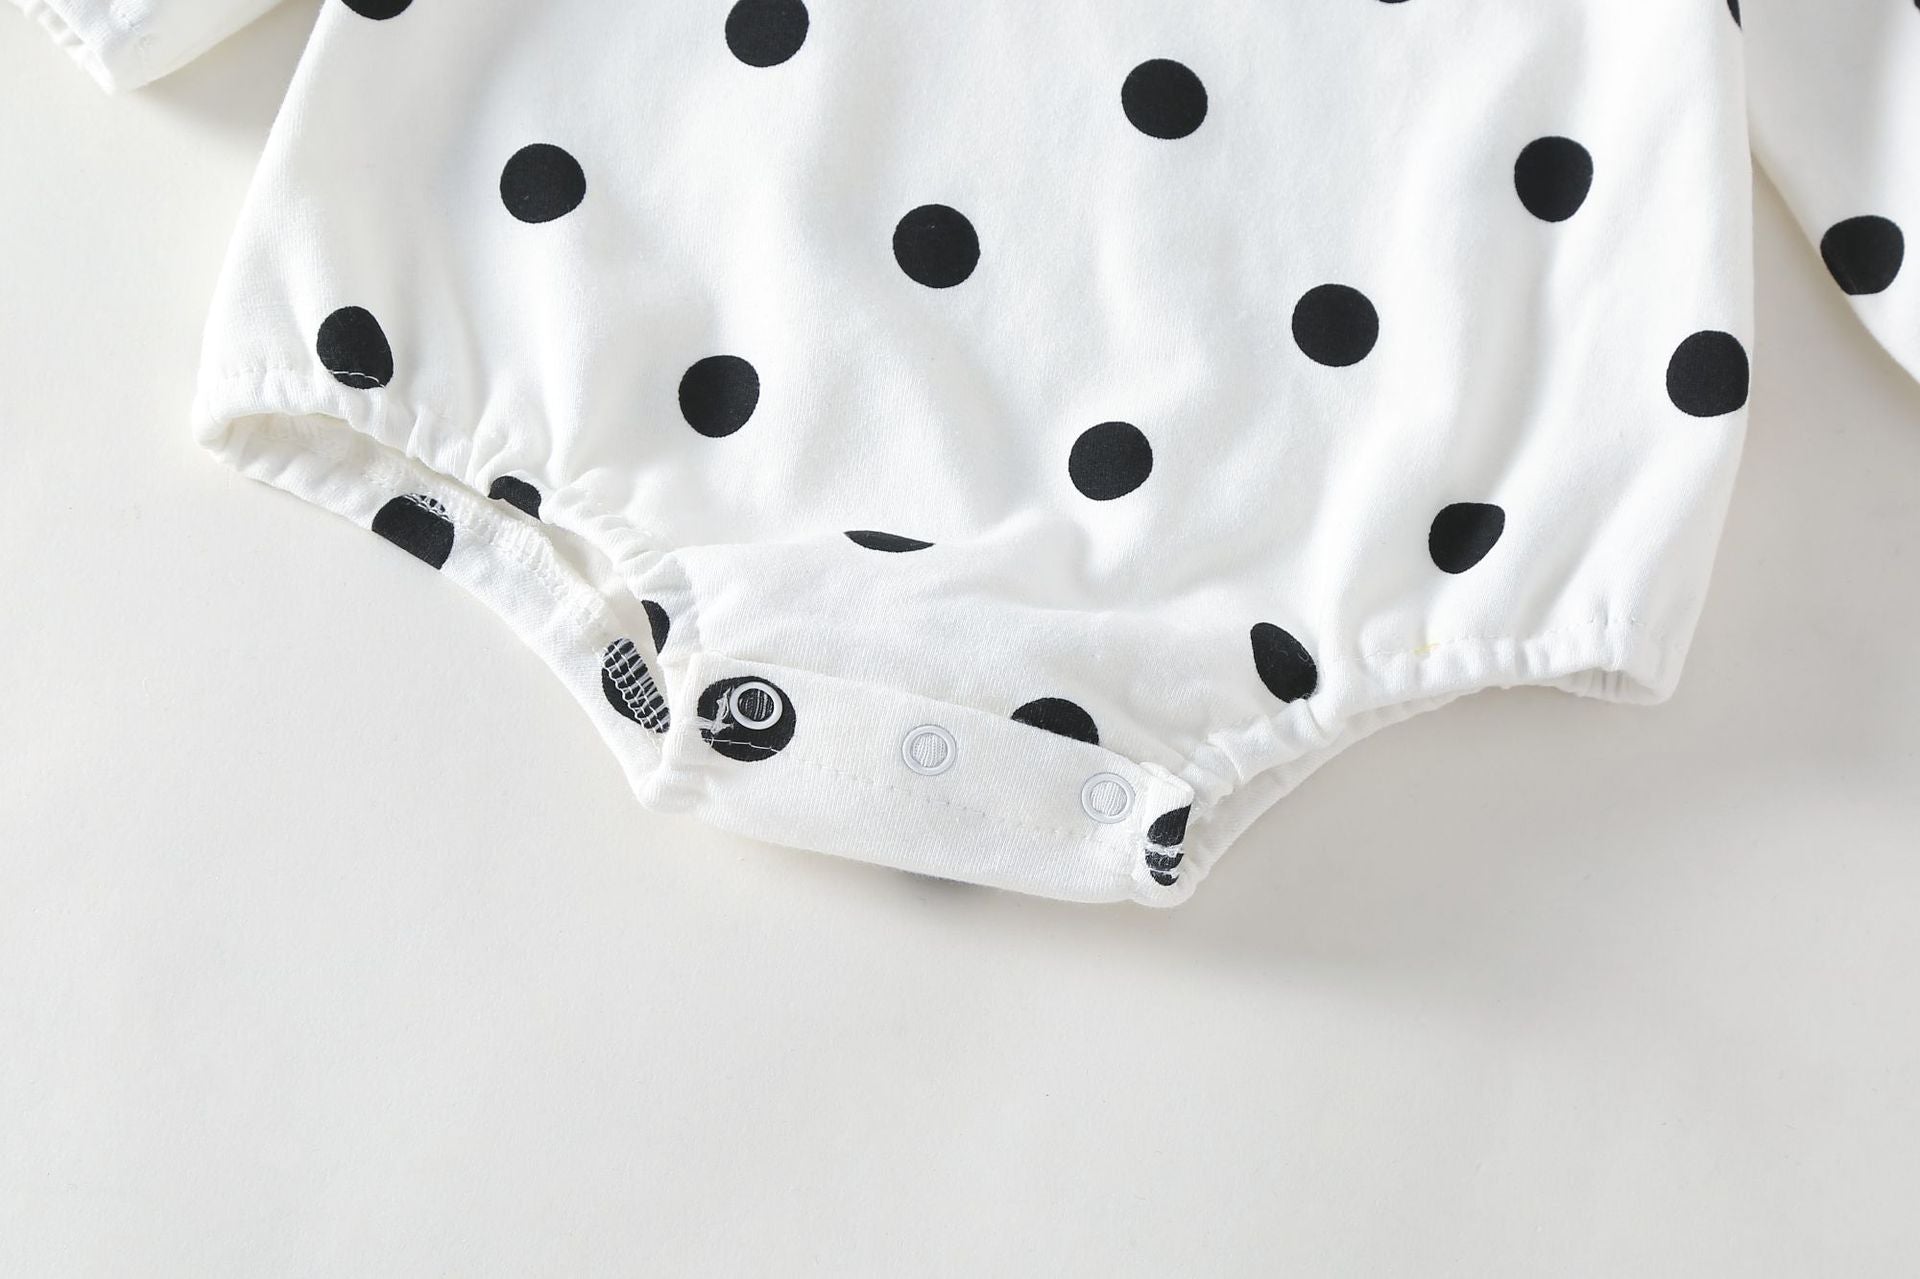 Baby Girl Polka Dot Pattern Strawberry Embroidered Doll Neck Detachable Design Bodysuit & Hat My Kids-USA